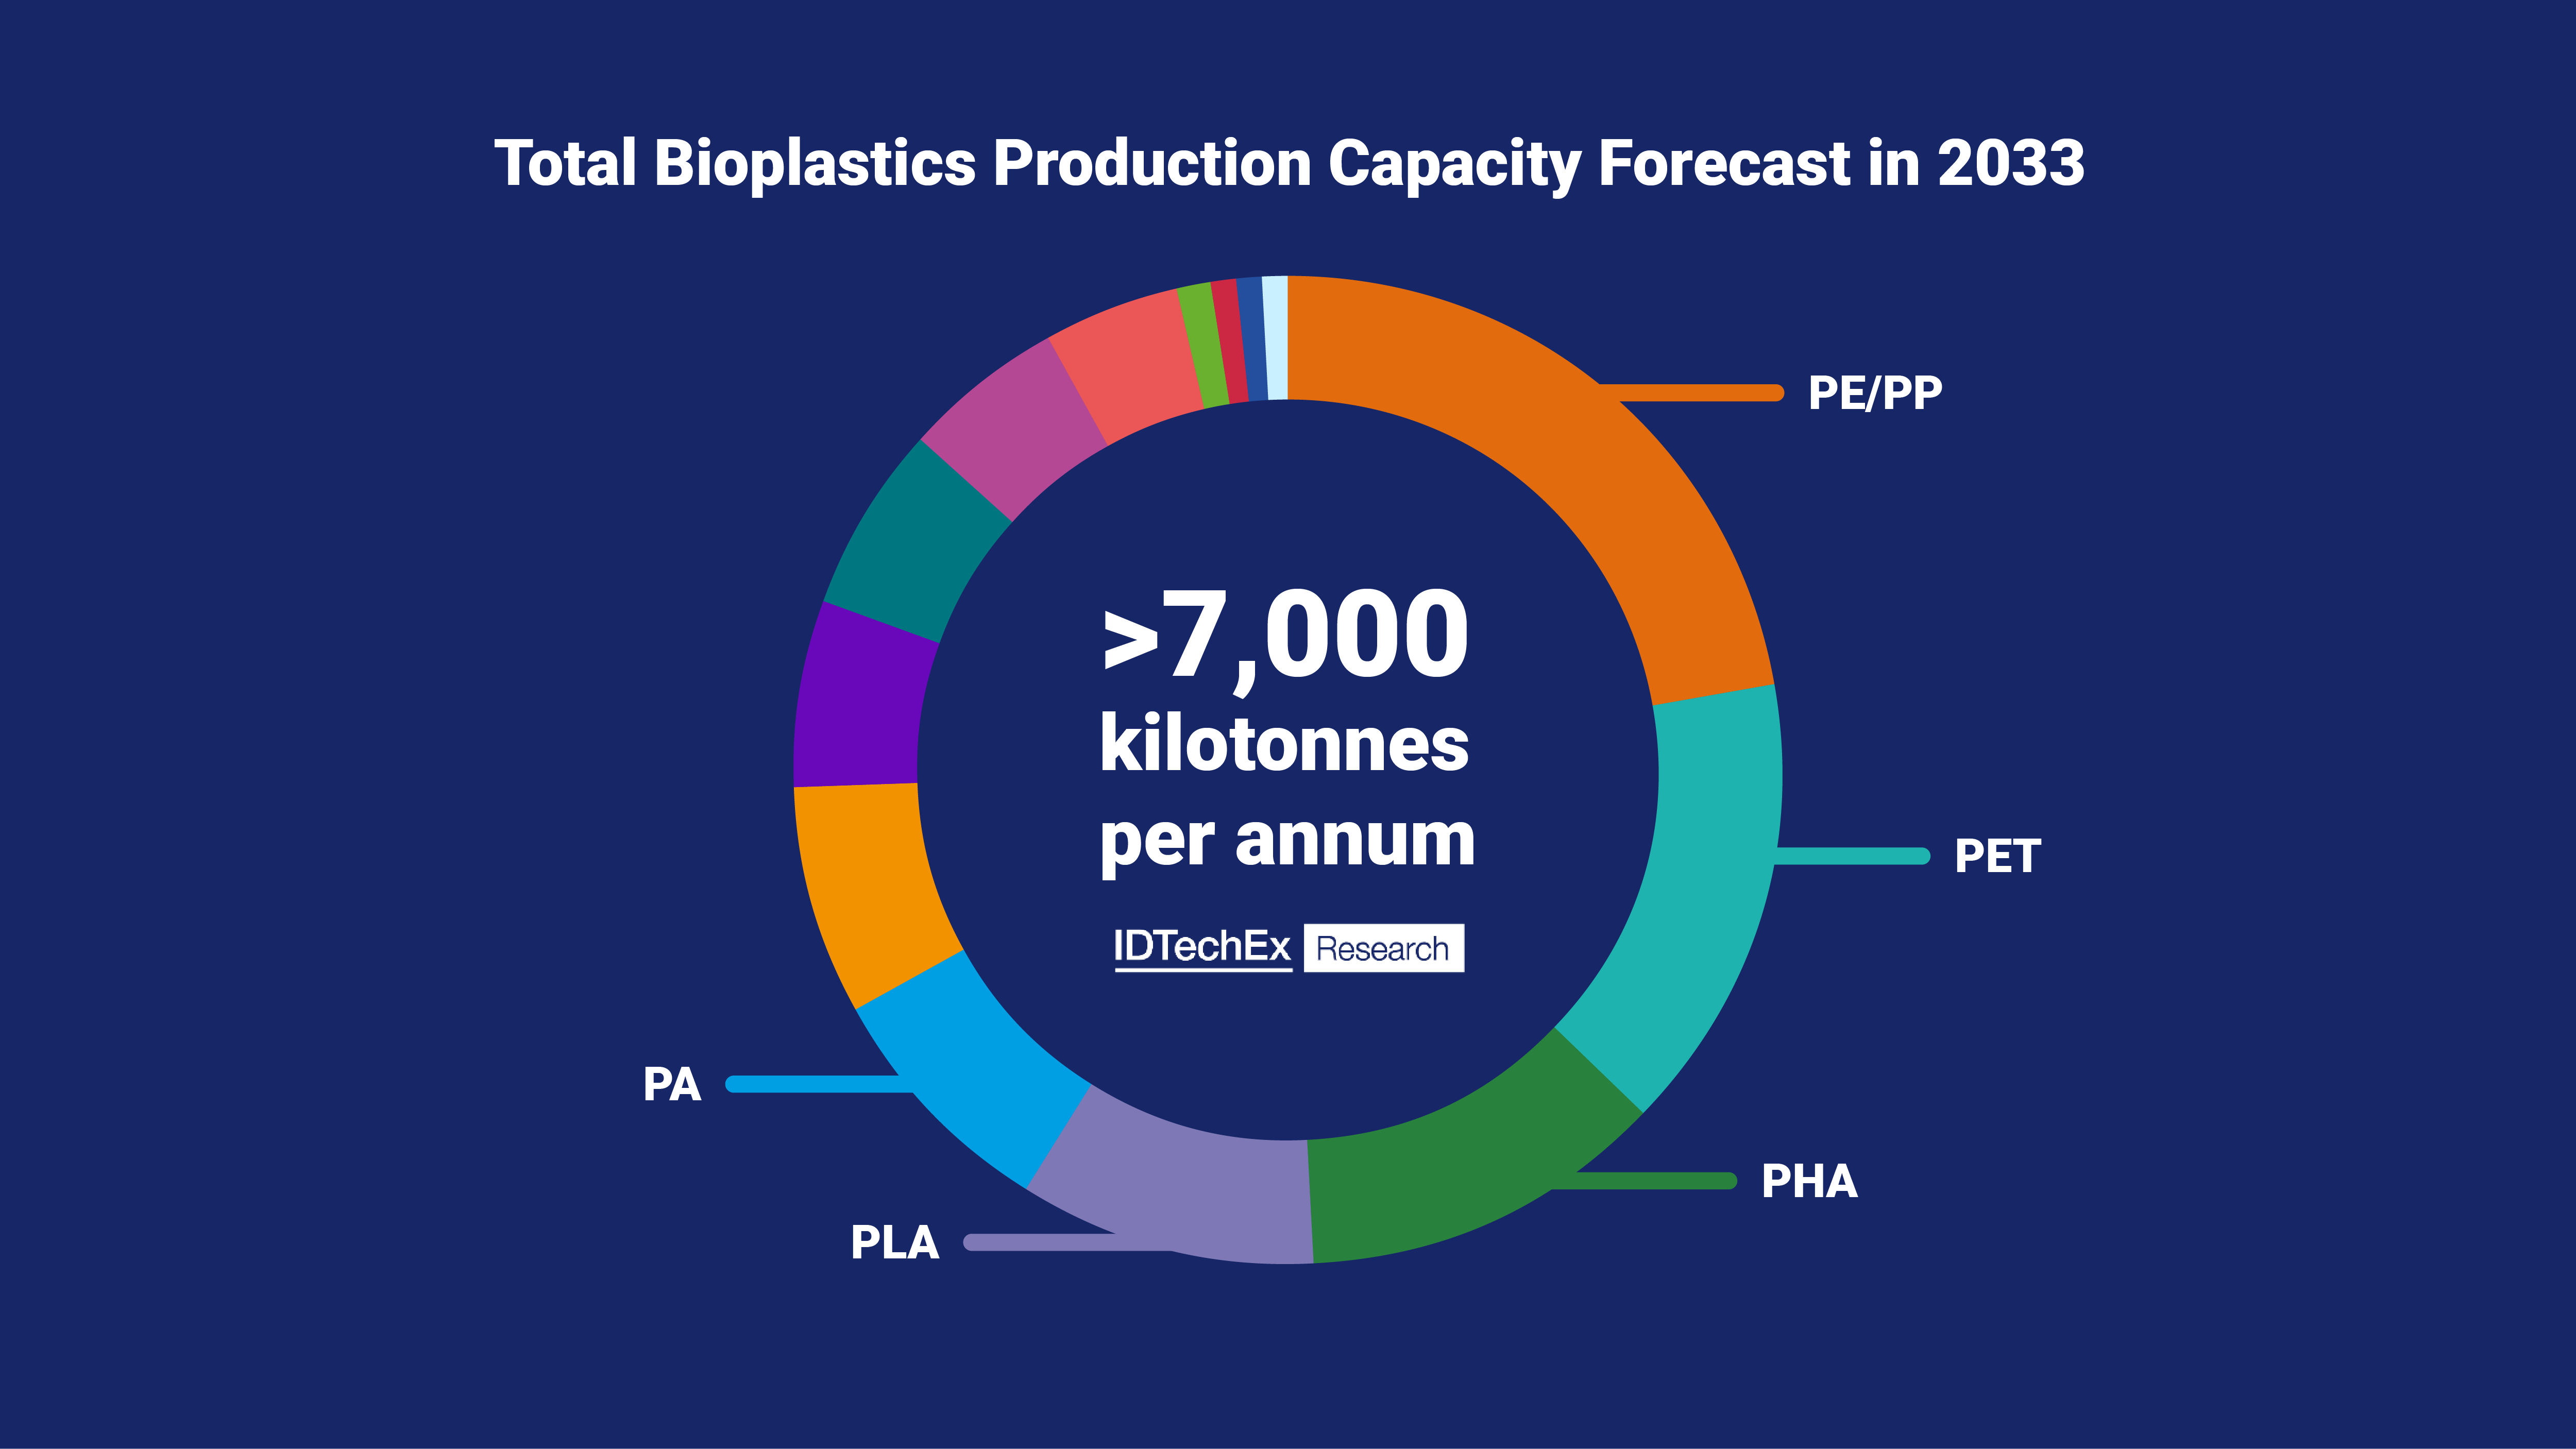 Total bioplastics production capacity forecast in 2033. Source: IDTechEx